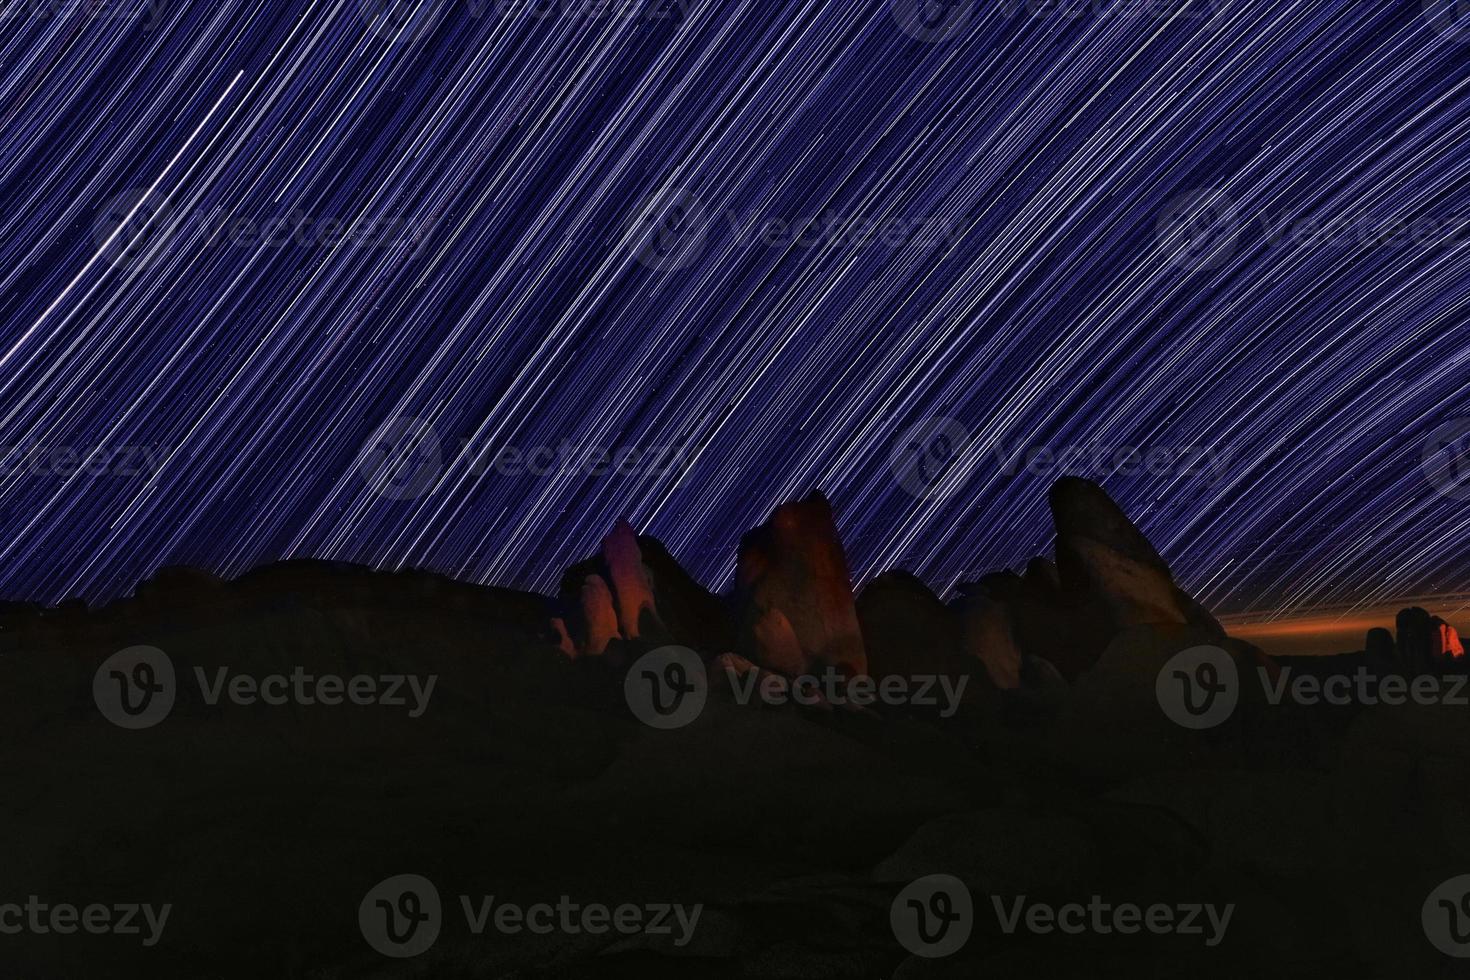 trilhas de estrelas no parque nacional joshua tree foto